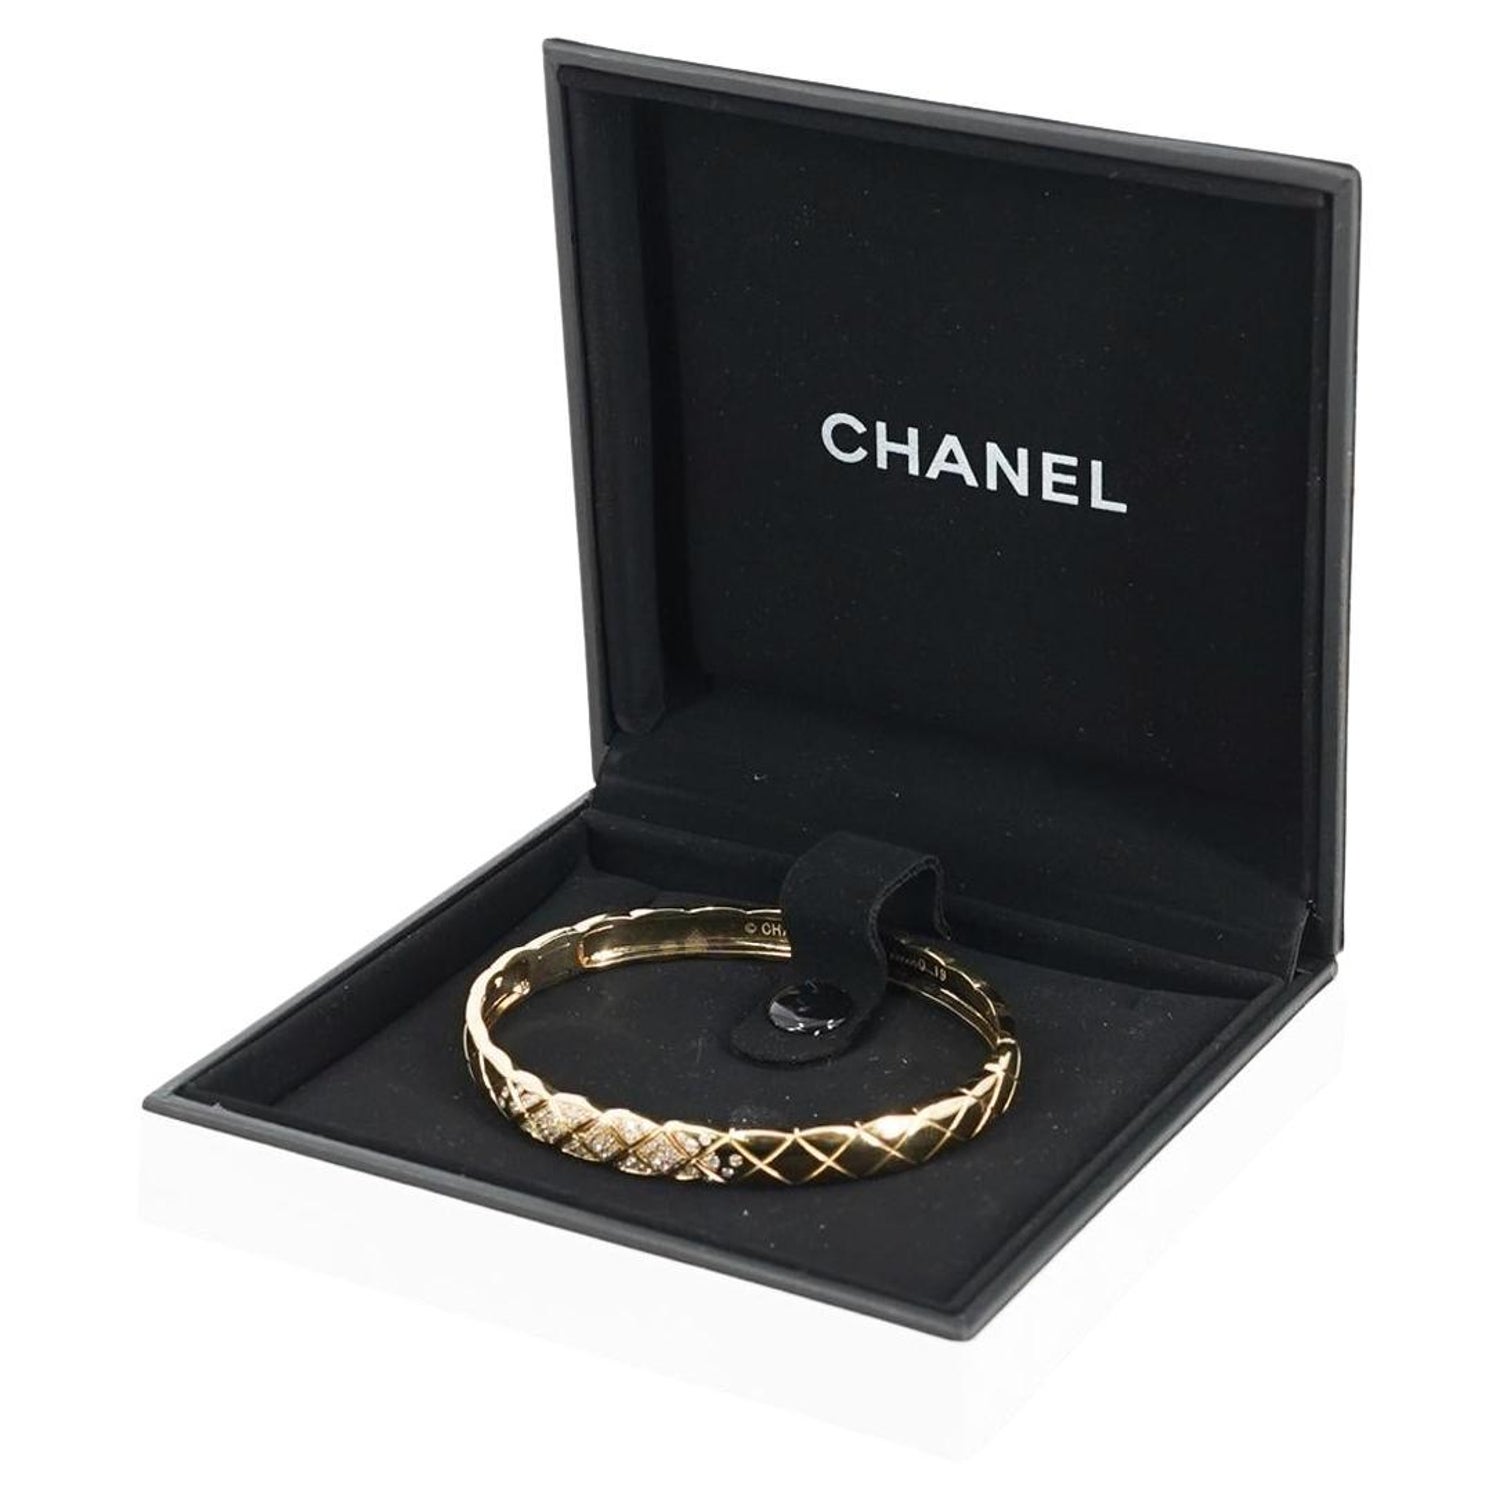 Chanel Coco Crush Bracelet - For Sale on 1stDibs